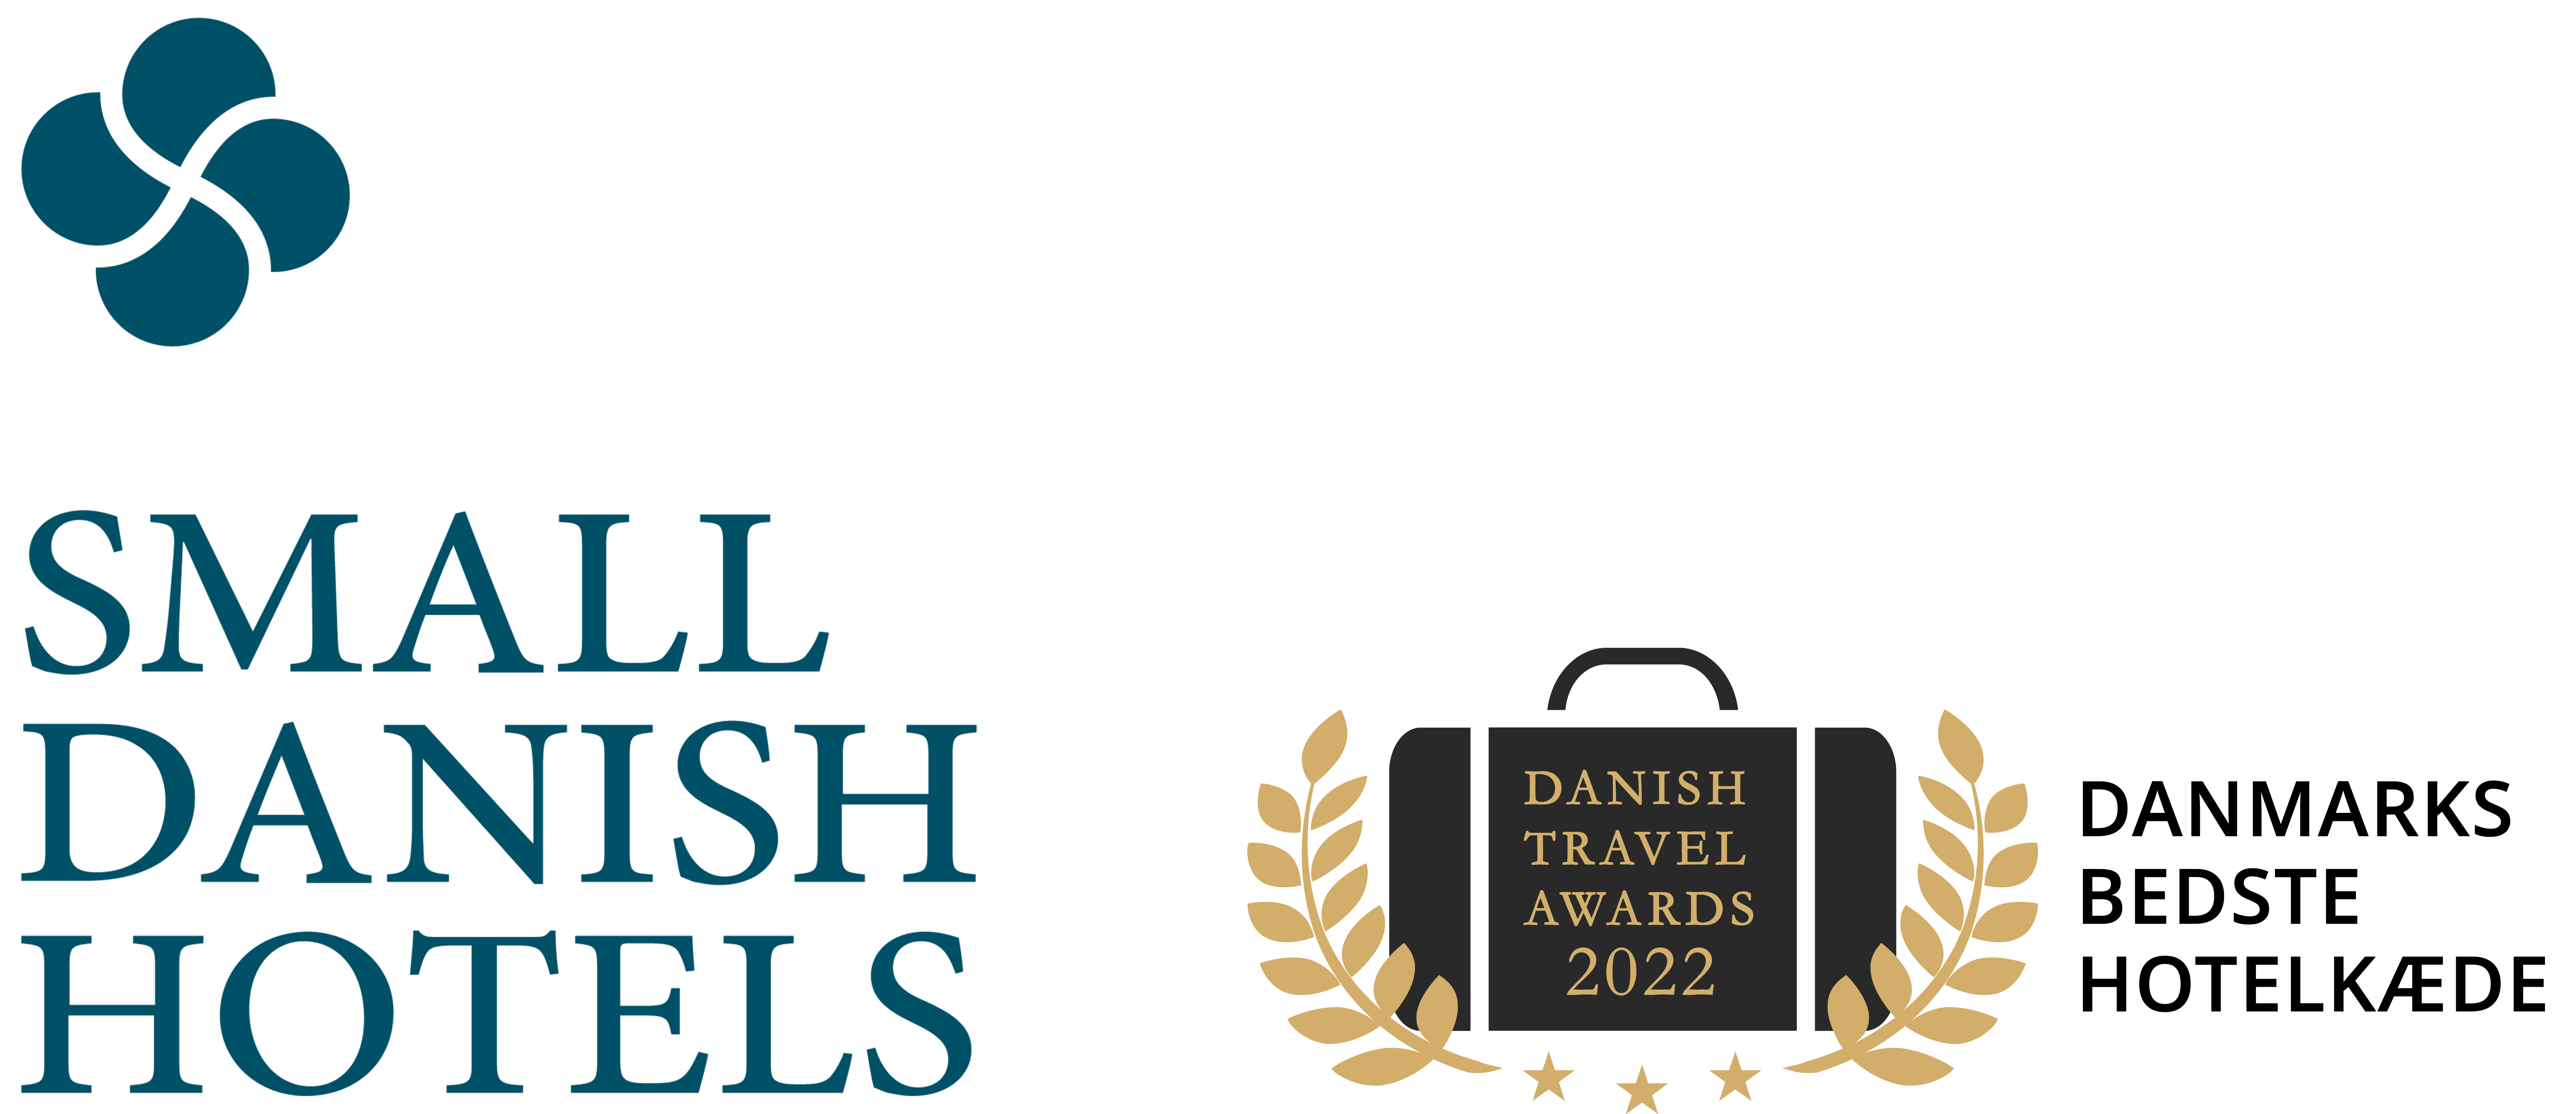 Small Danish Hotels